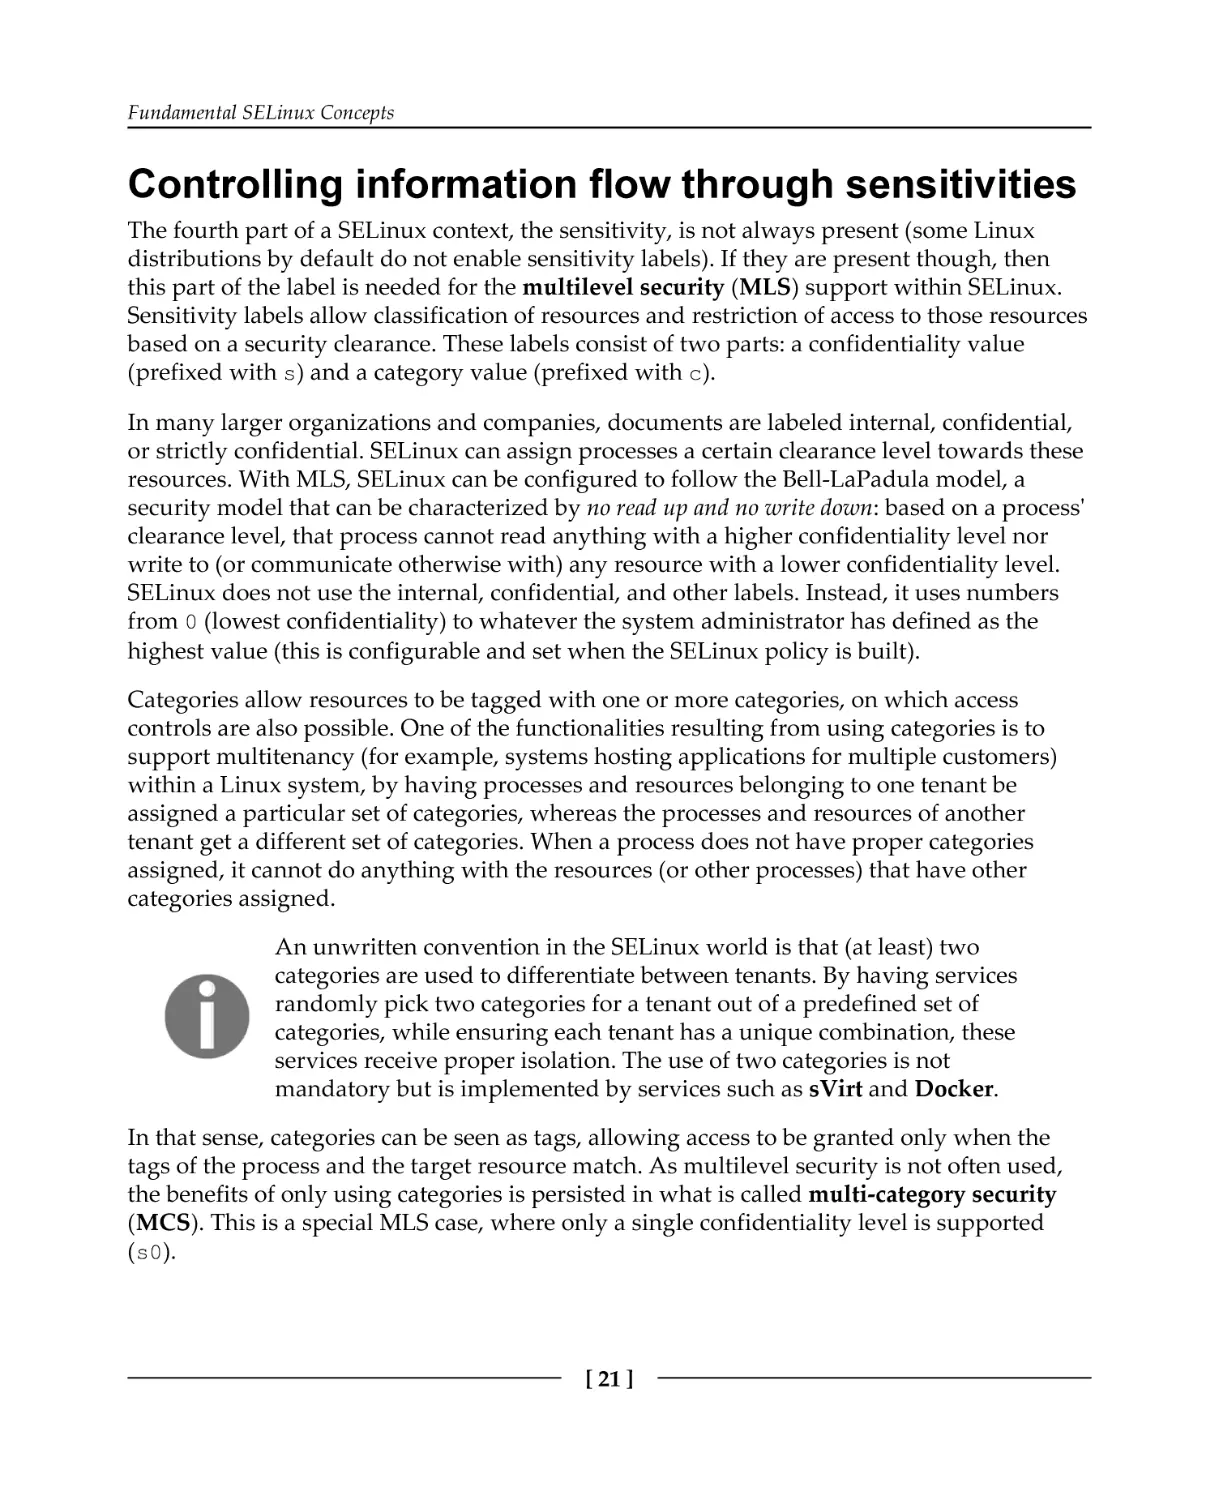 Controlling information flow through sensitivities